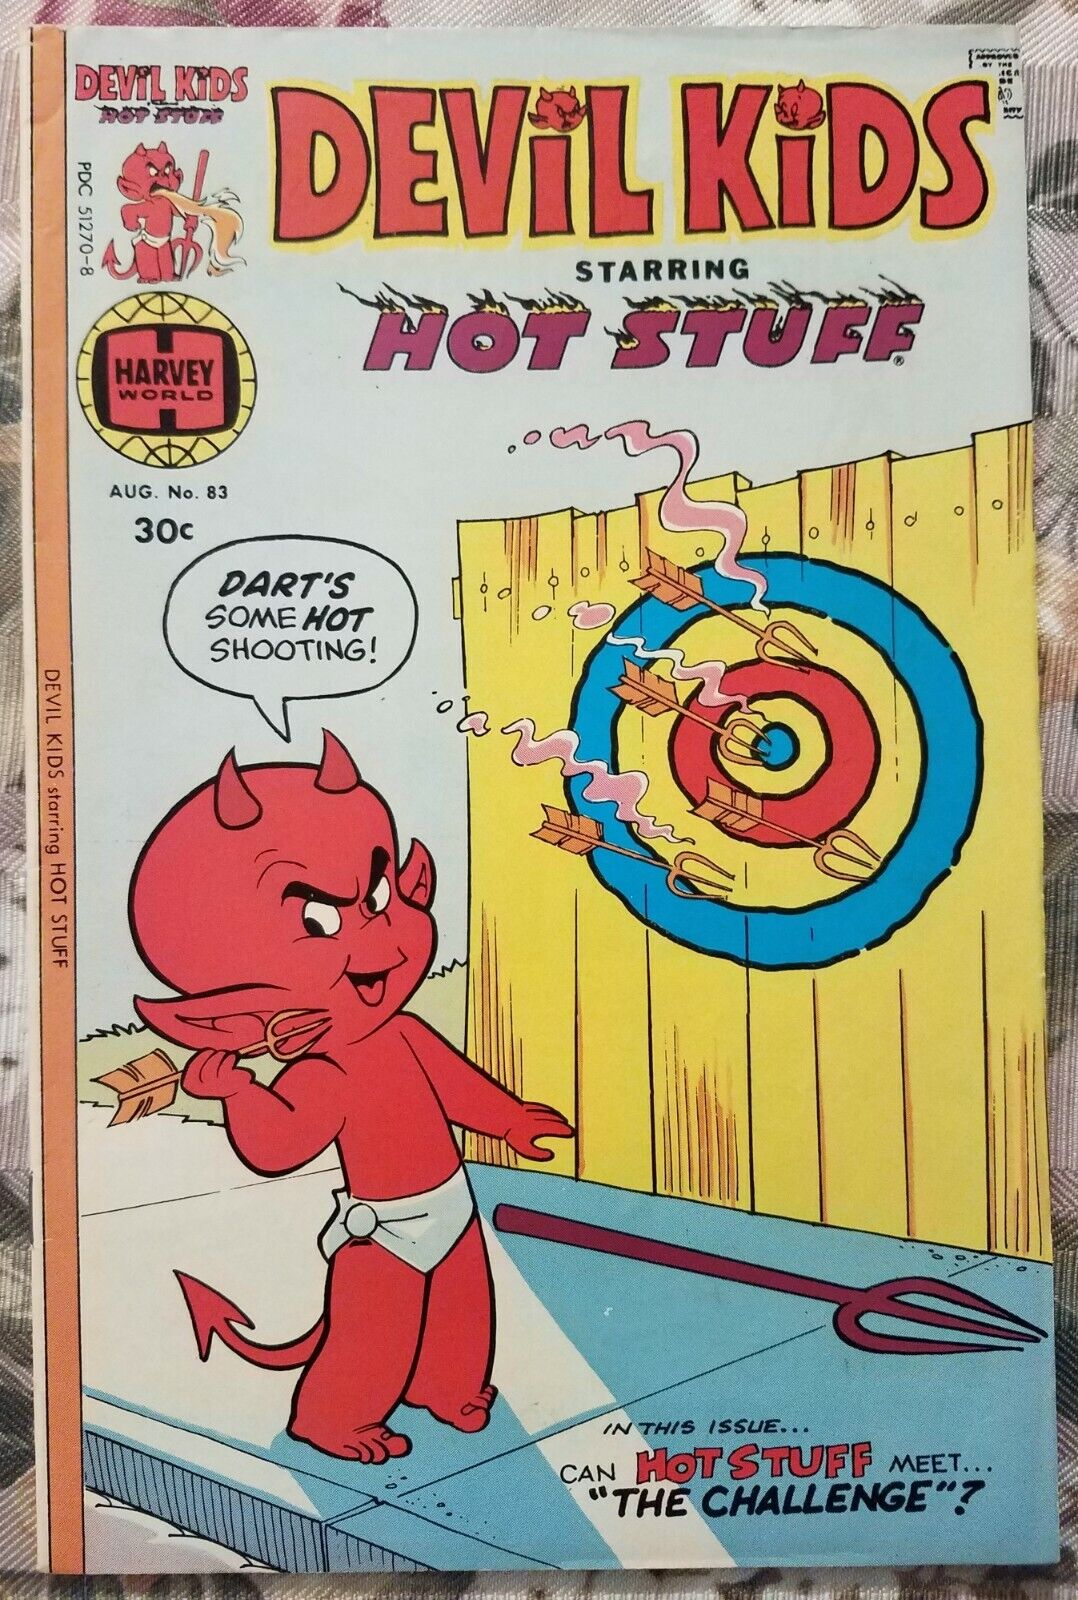 Devil Kids Starring Hot Stuff #83 1977 August, Harvey Comic